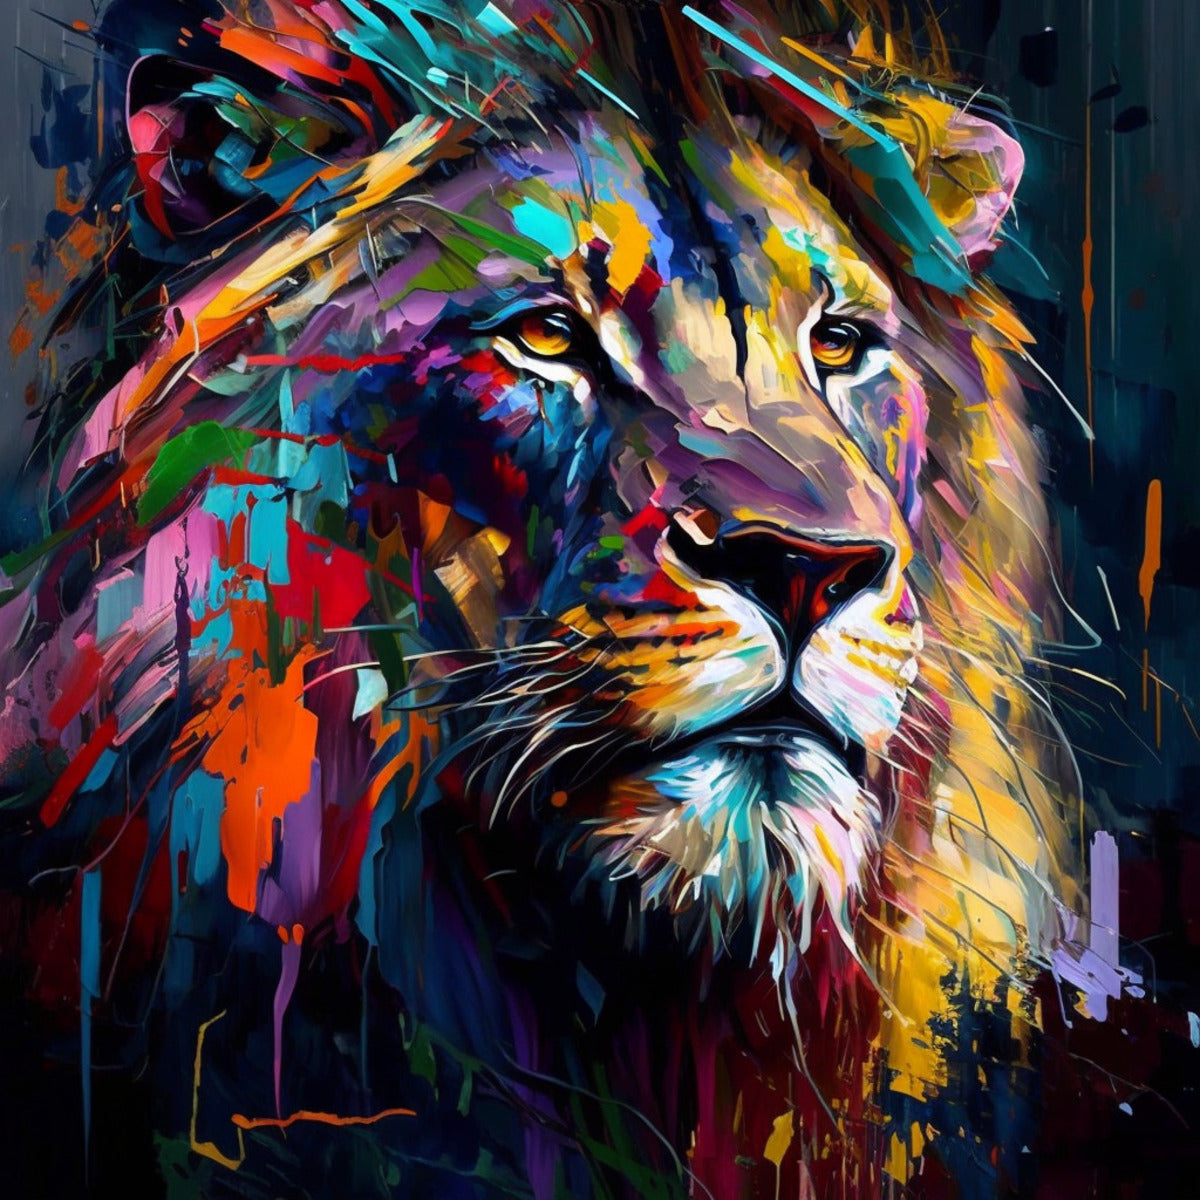 kaleidoscope lion palette knife oil painting by Goldfishwallart